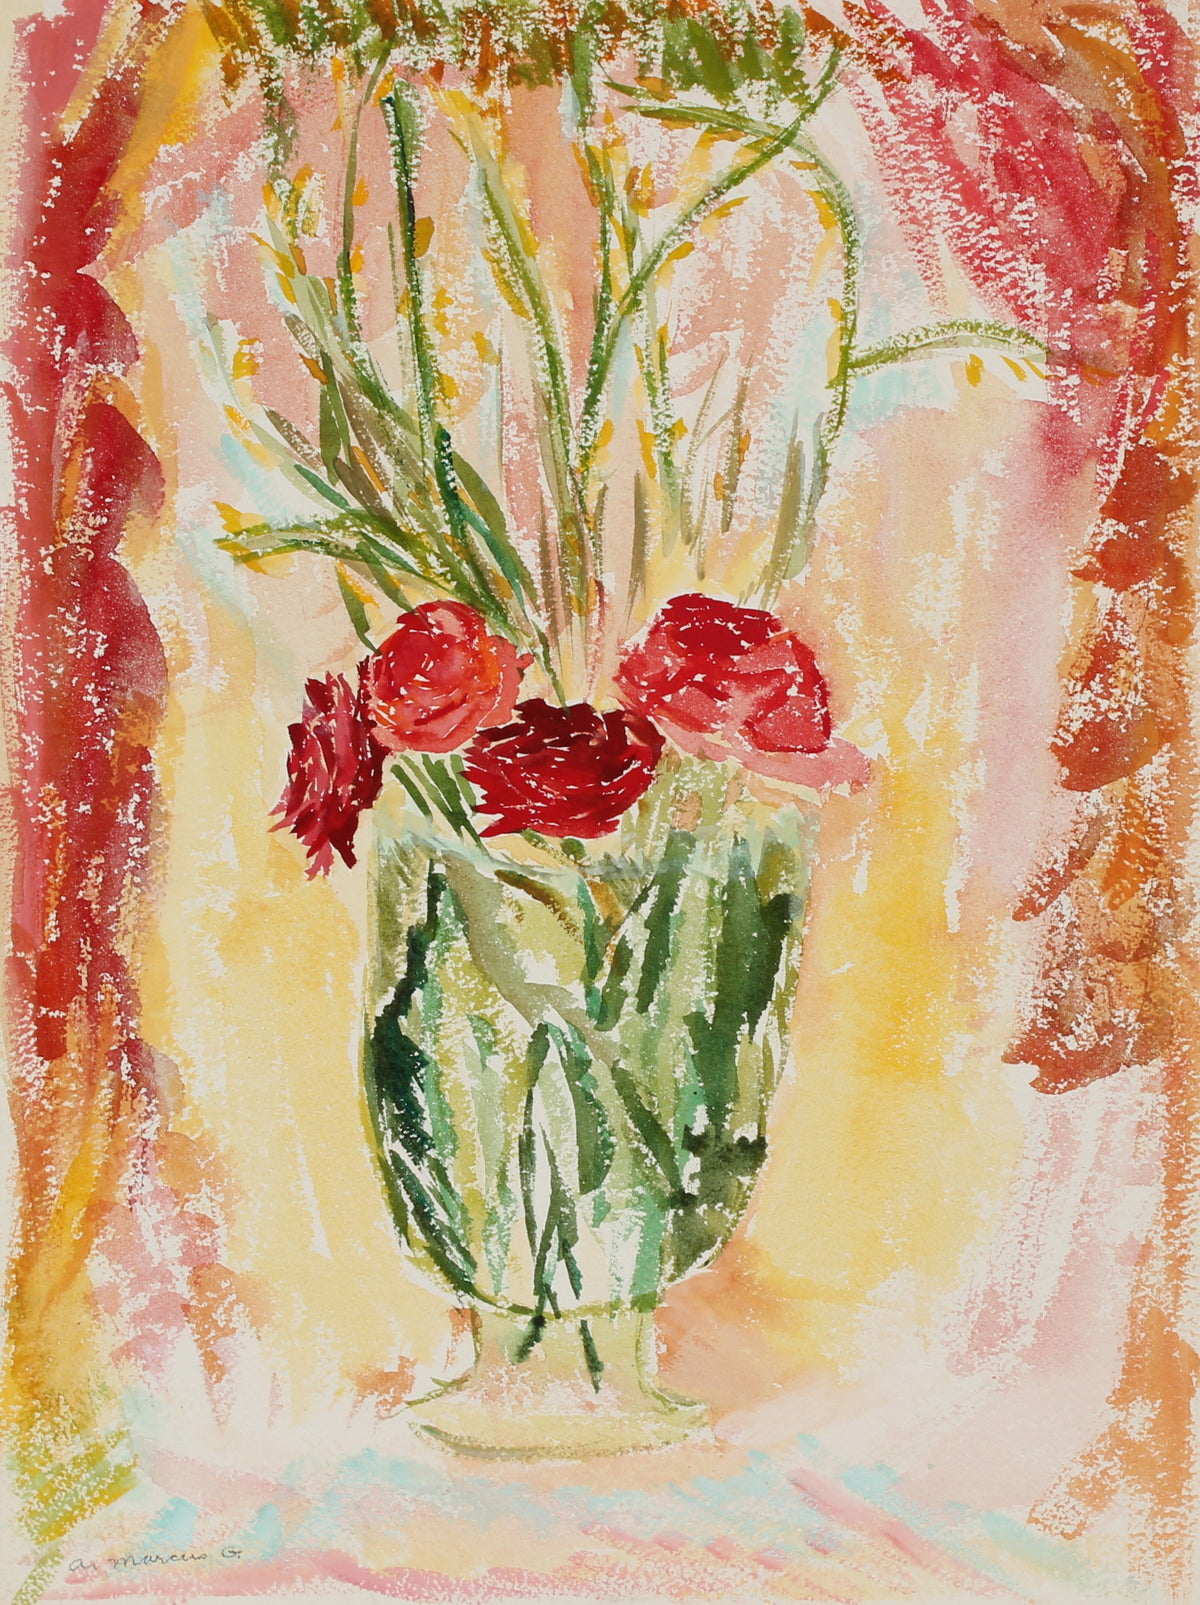 &lt;i&gt;Red Flowers in a Vase&lt;/i&gt;&lt;br&gt;Watercolor, 1970s&lt;br&gt;&lt;br&gt;#89605